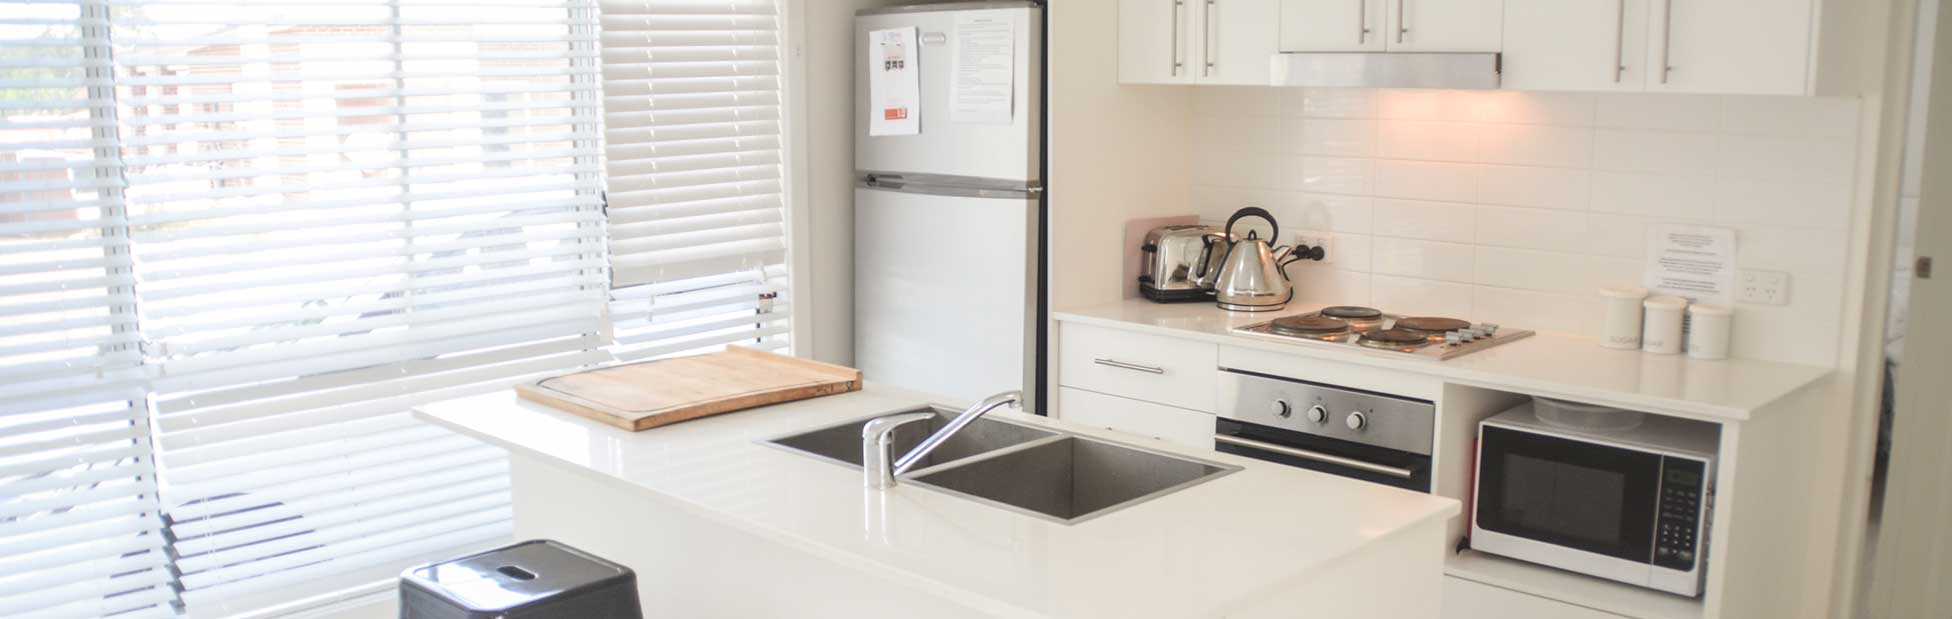 Image of a white kitchen